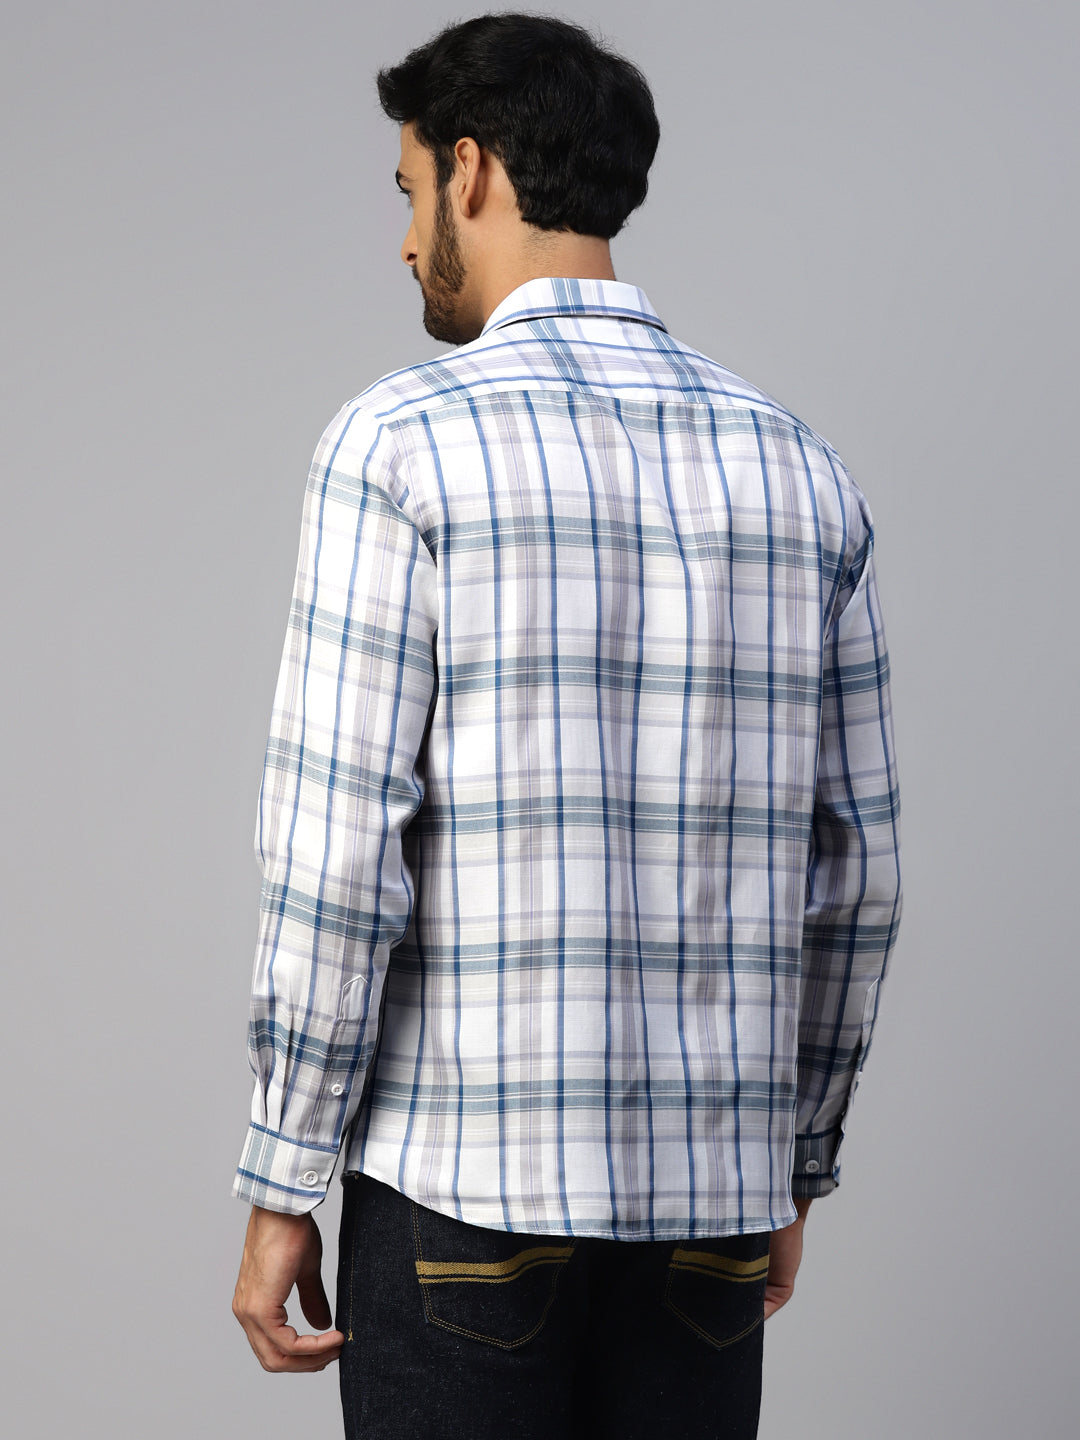 Men's Blue & Grey Checks Slim Fit Shirt by Don Vino